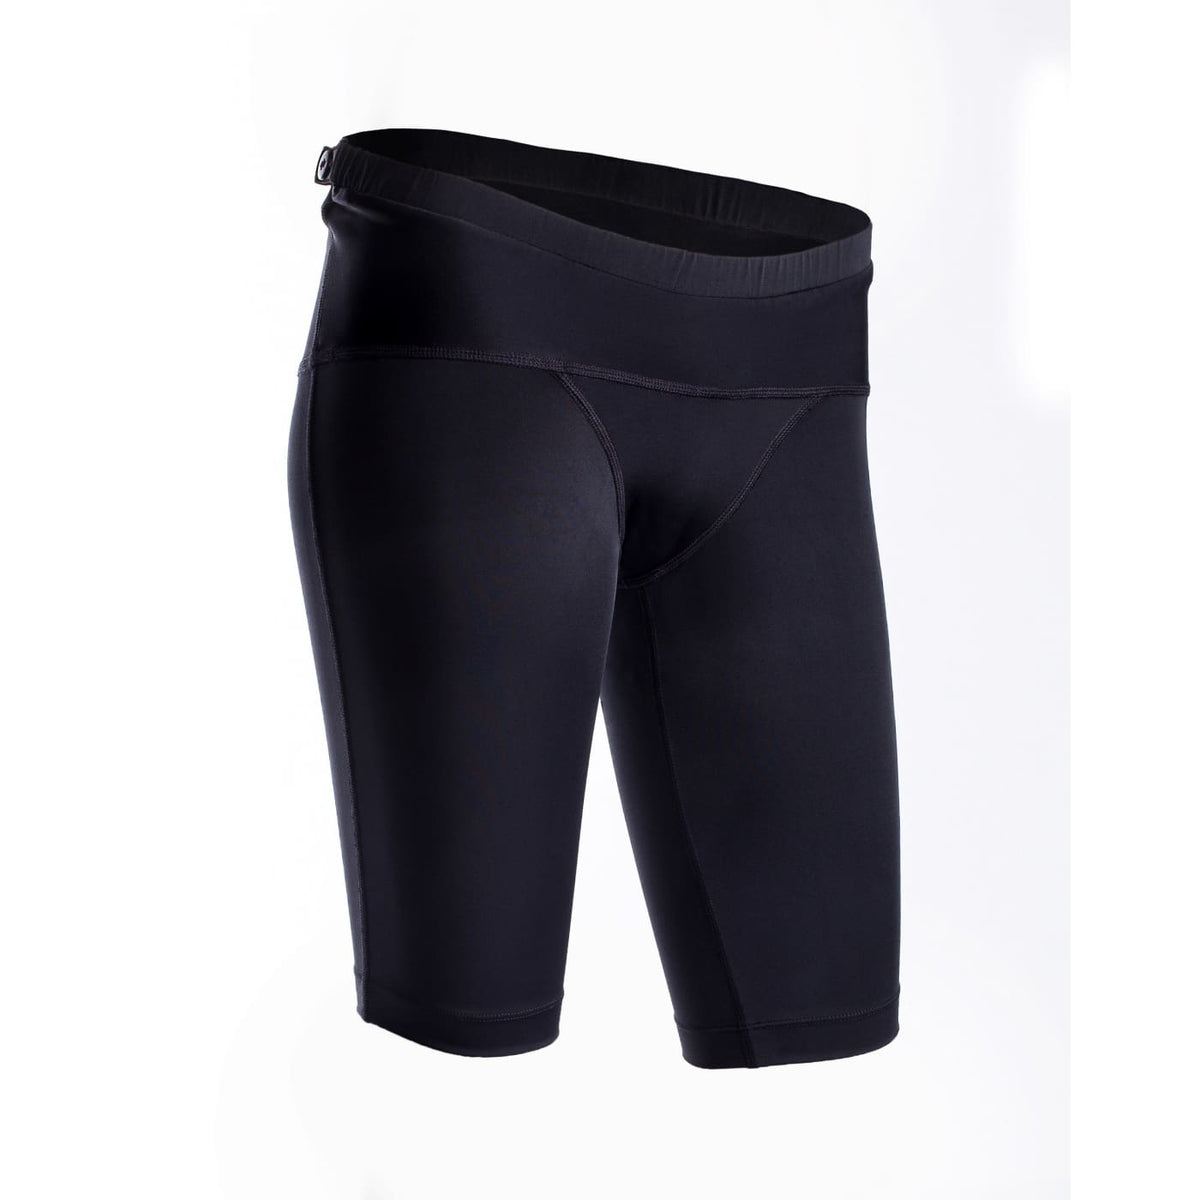 SRC Pregnancy Shorts - Black XS - FOR MUM - MATERNITY SUPPORT GARMENTS (PRE/POST)